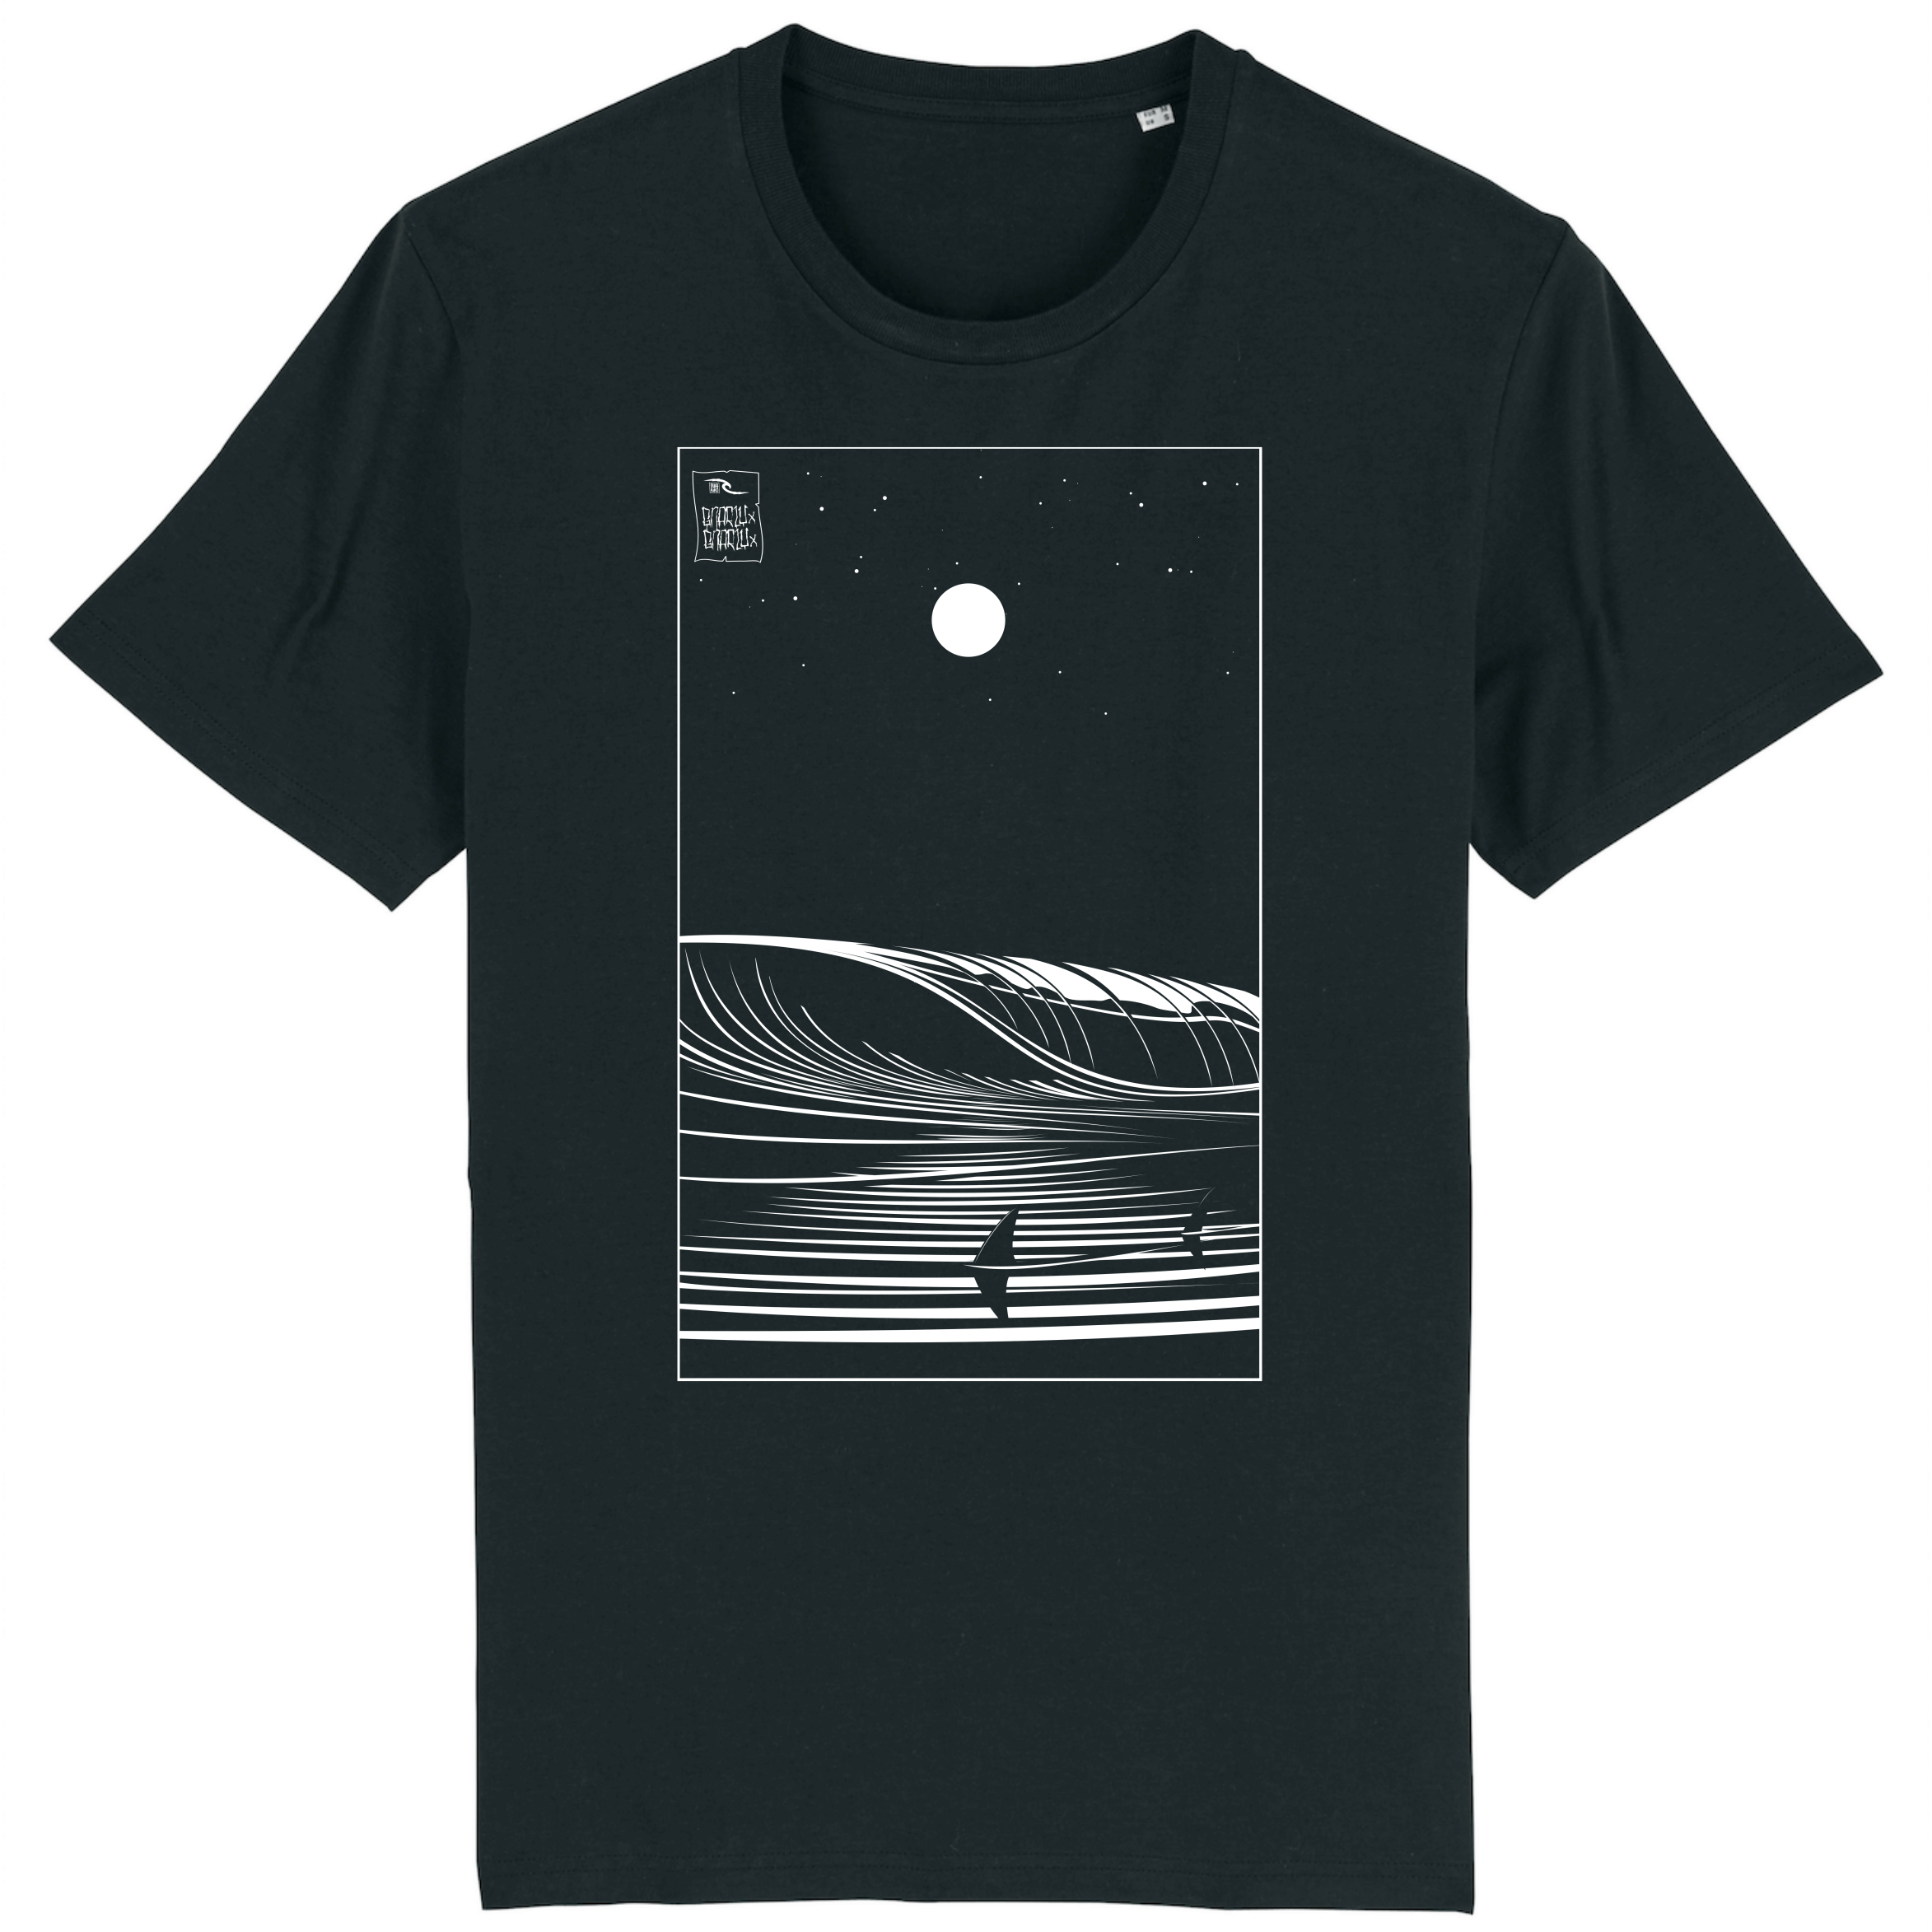 Surf t-shirt men black, Dark Wave